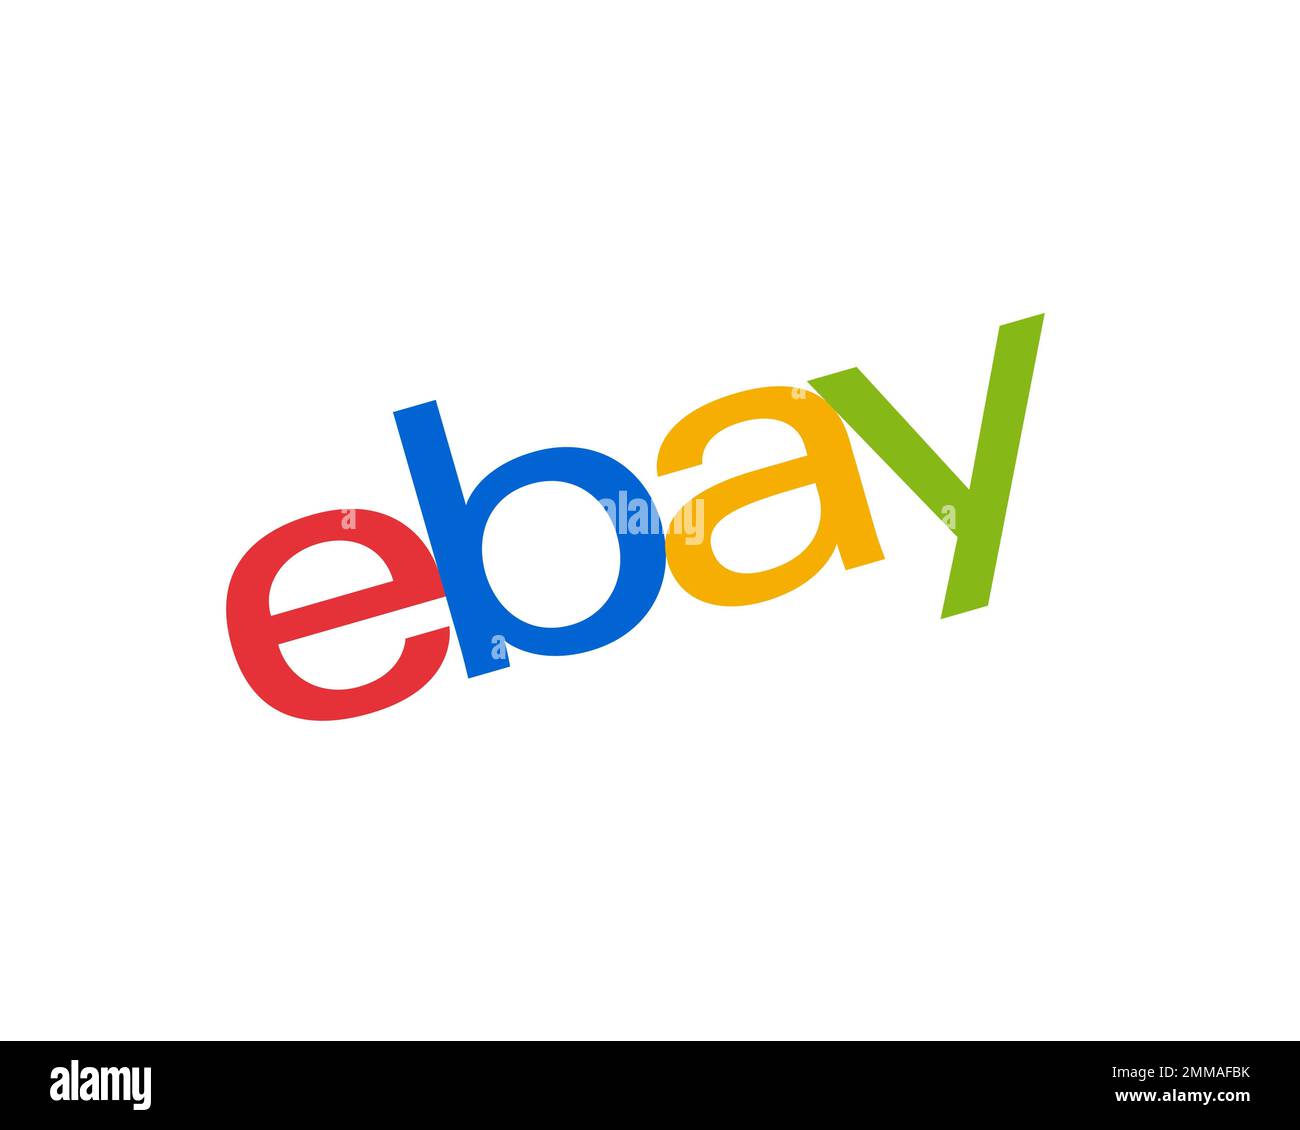 EBay, Rotated, White background, Logo, Brand name Stock Photo